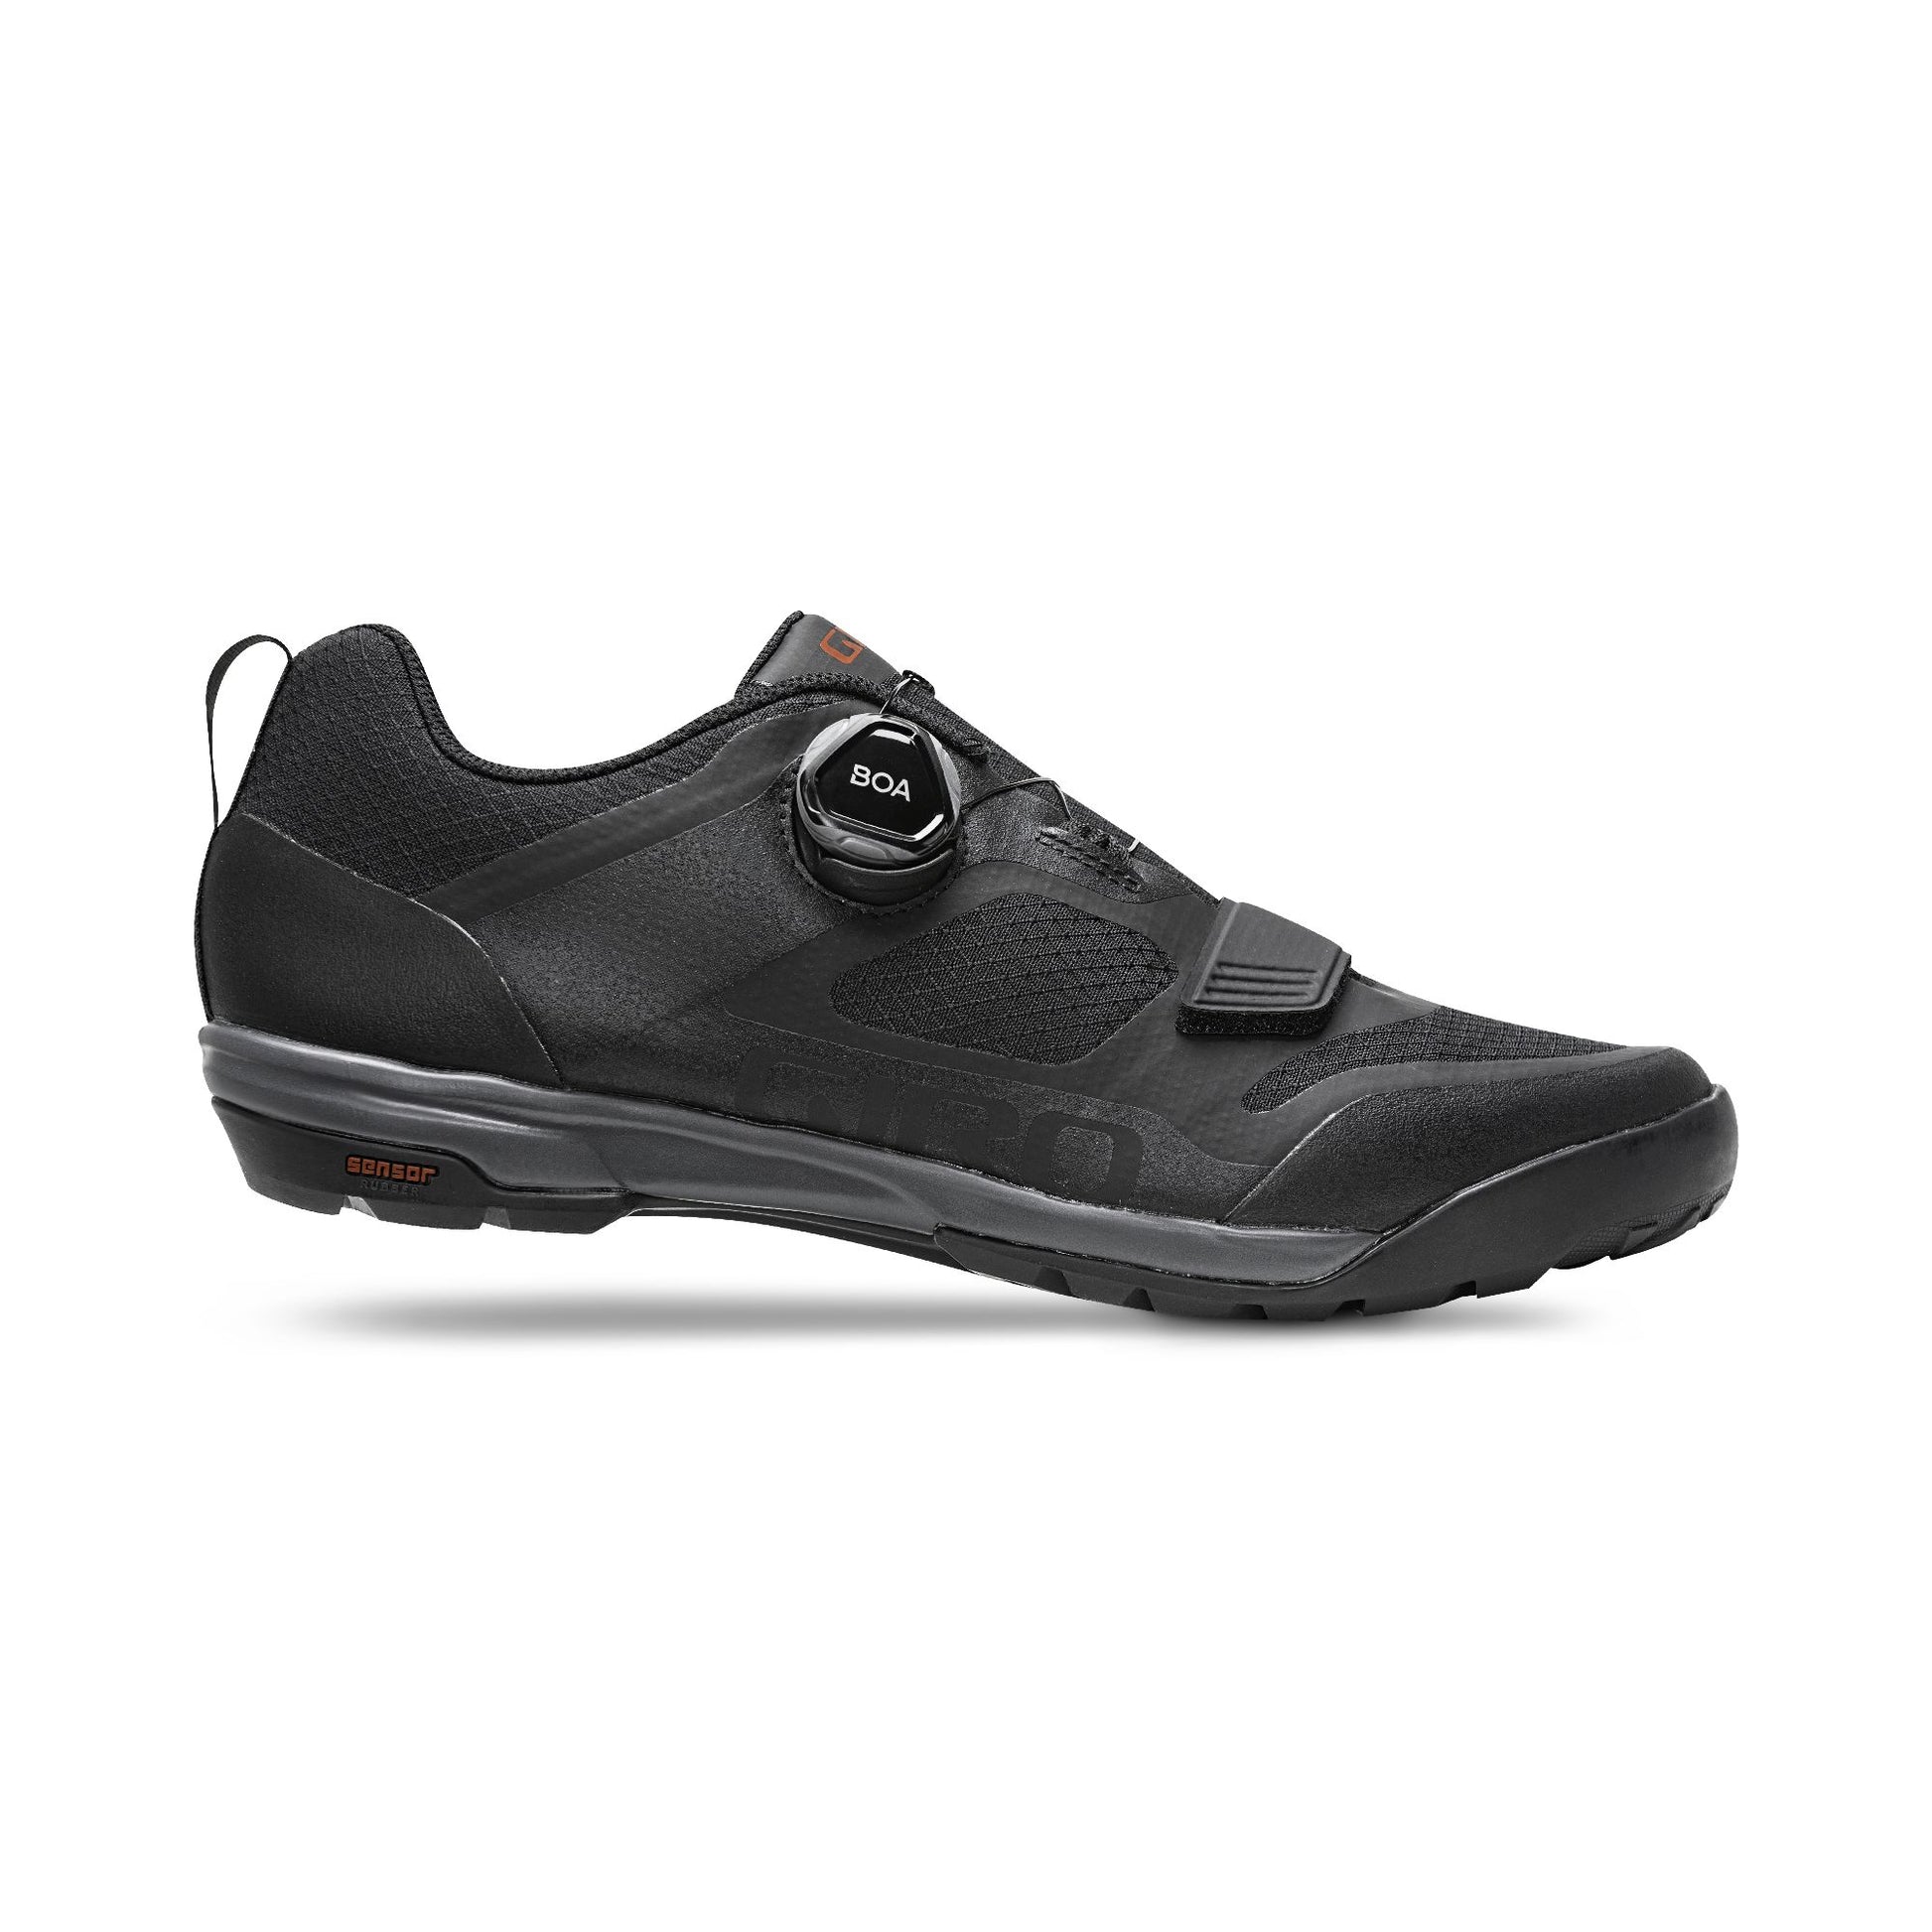 Giro Men's Ventana Shoe Black/Dark Shadow Bike Shoes